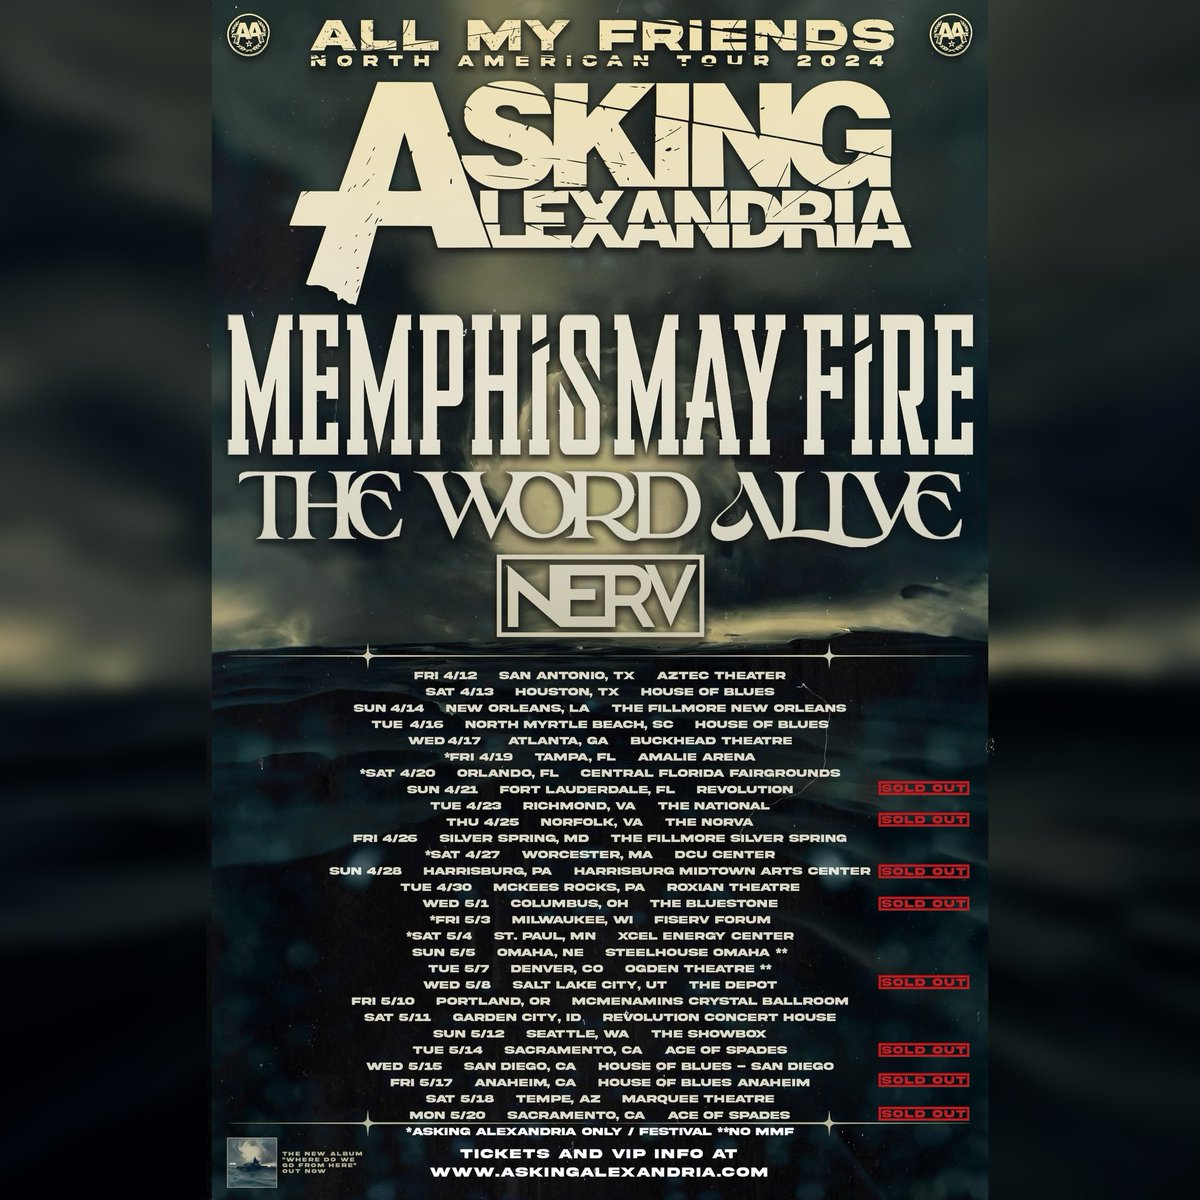 Low tickets tonight! MemphisMayFire.com